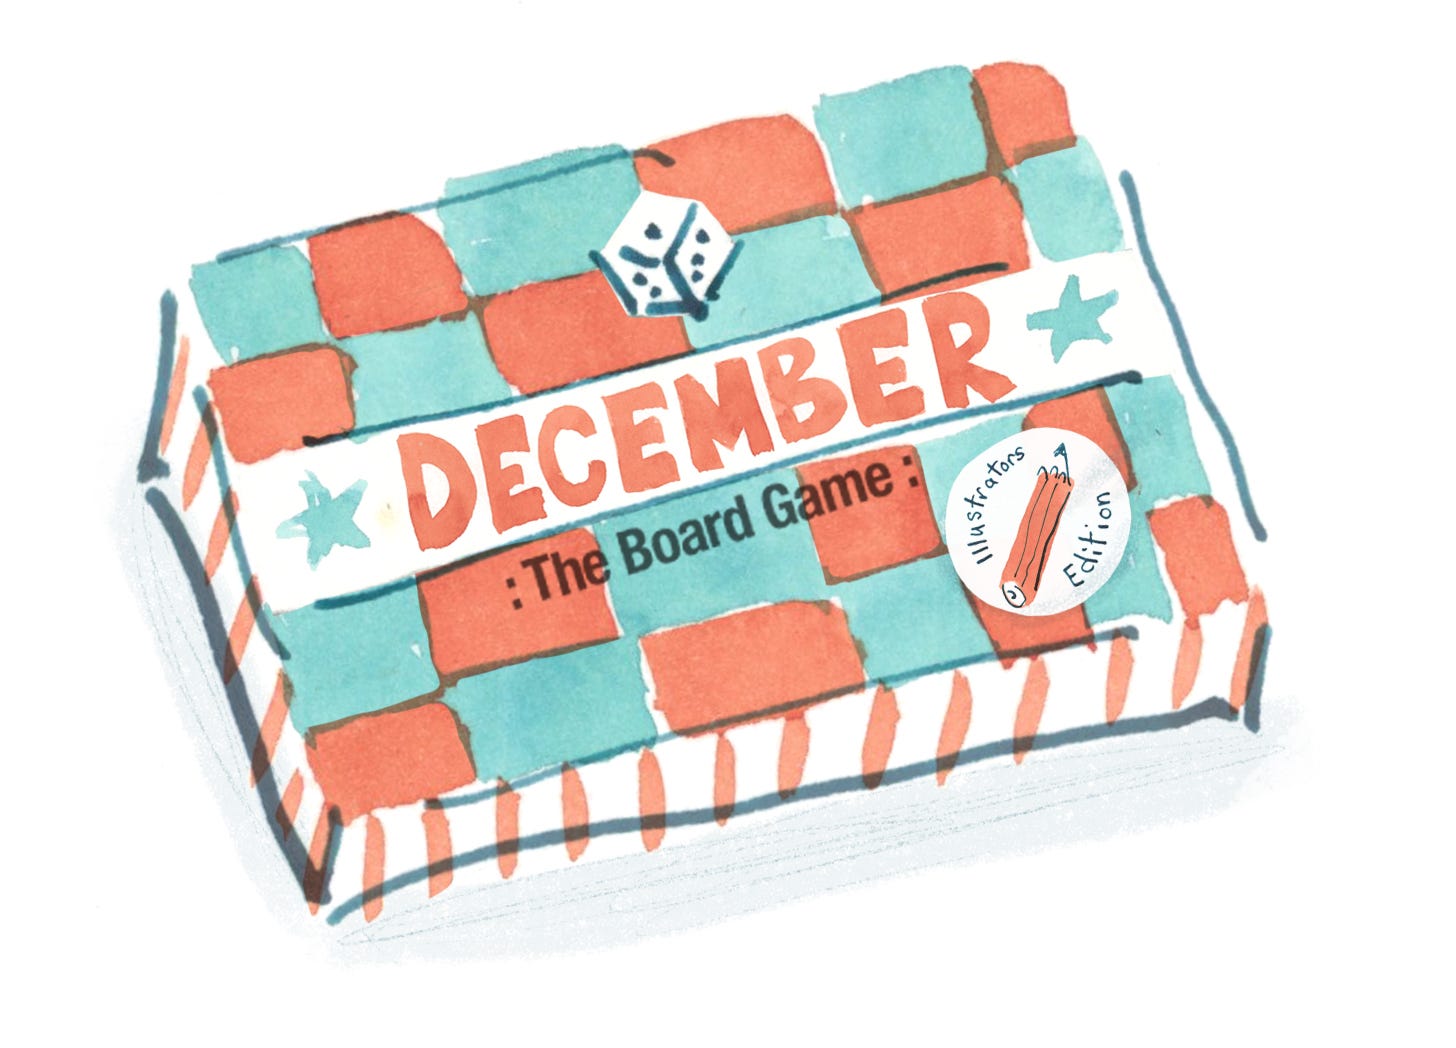 watercolour illustration of a board game box